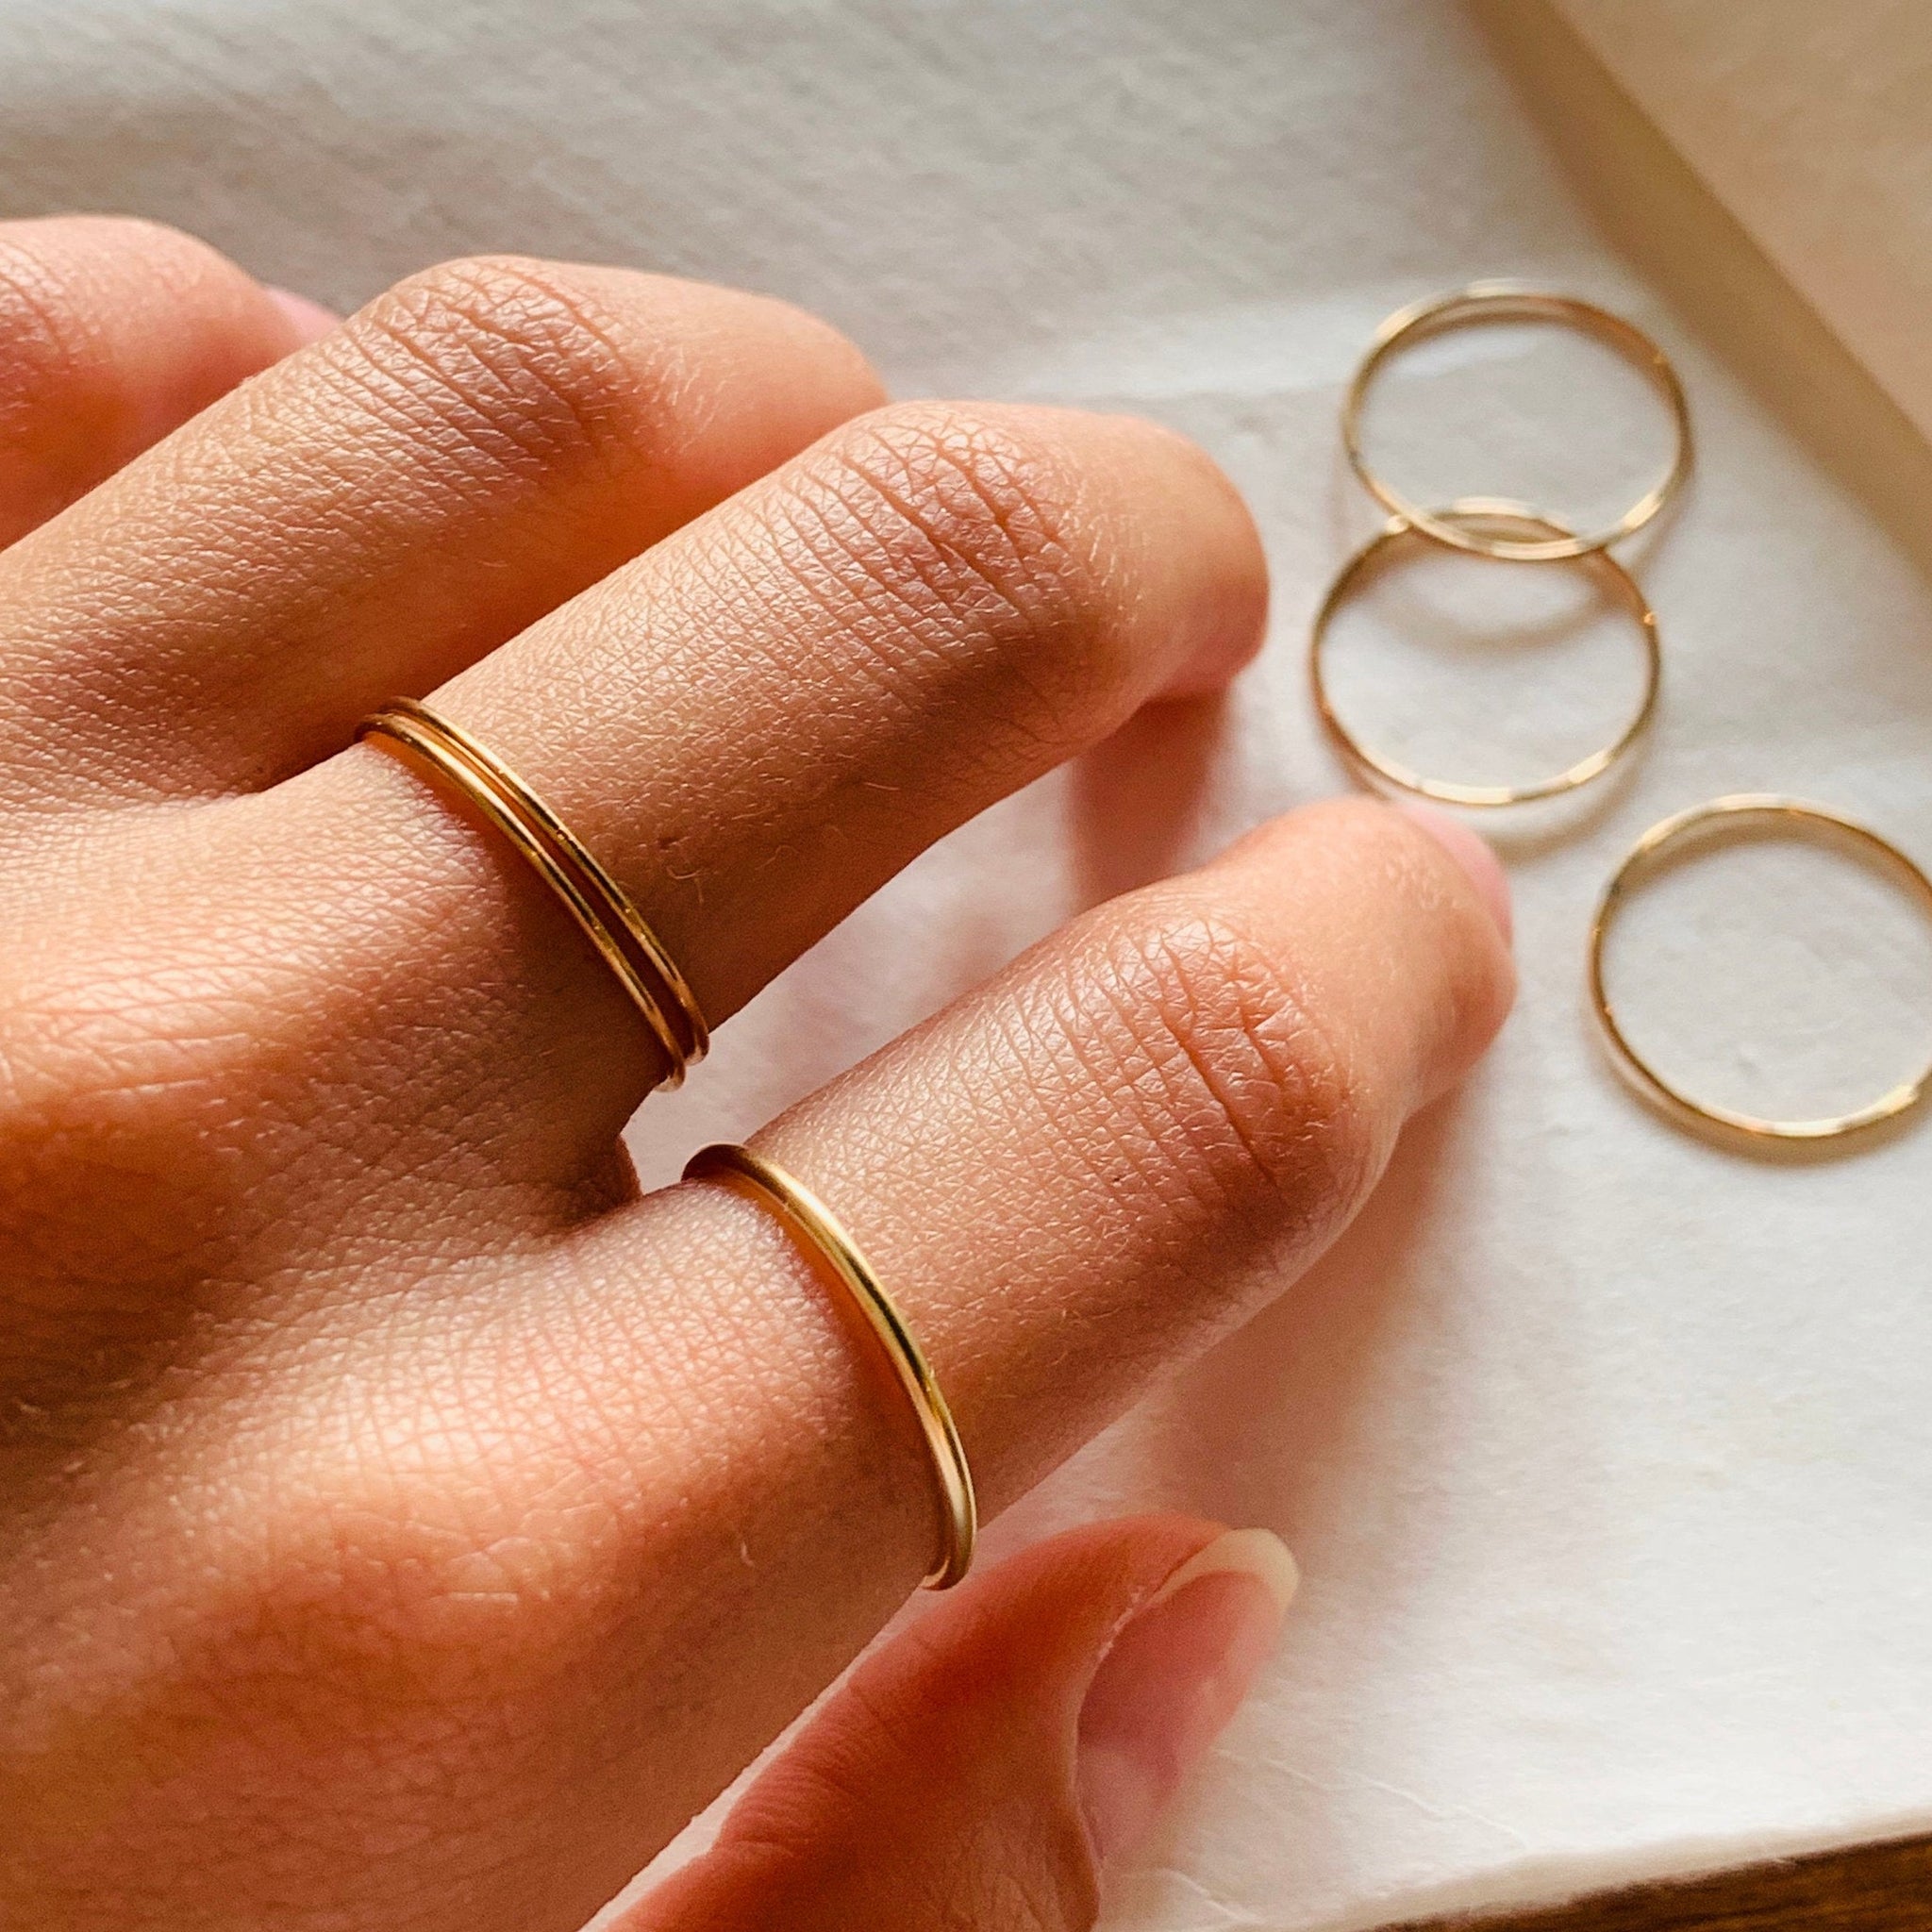 ORIGAMI DOLLAR DIAMOND RING TUTORIAL 折り紙 ダイヤの指輪 Mother's Day - YouTube